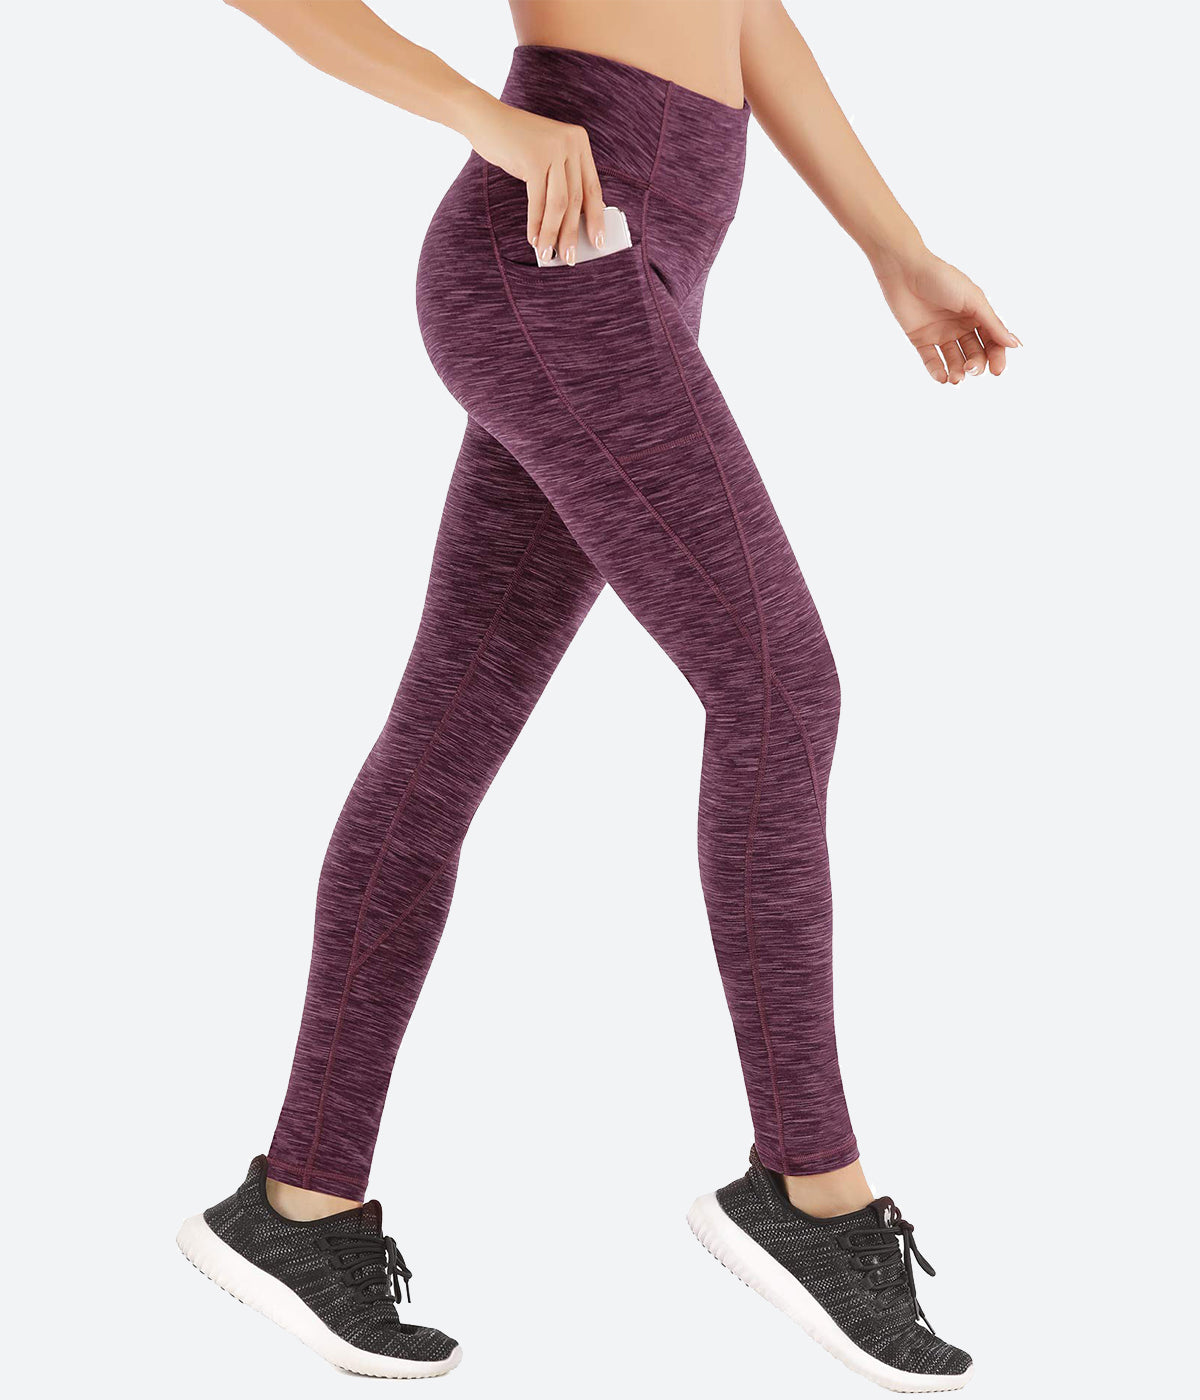 Heathyoga Women Bootcut High Waist Yoga Pants with Pockets, Black, Medium